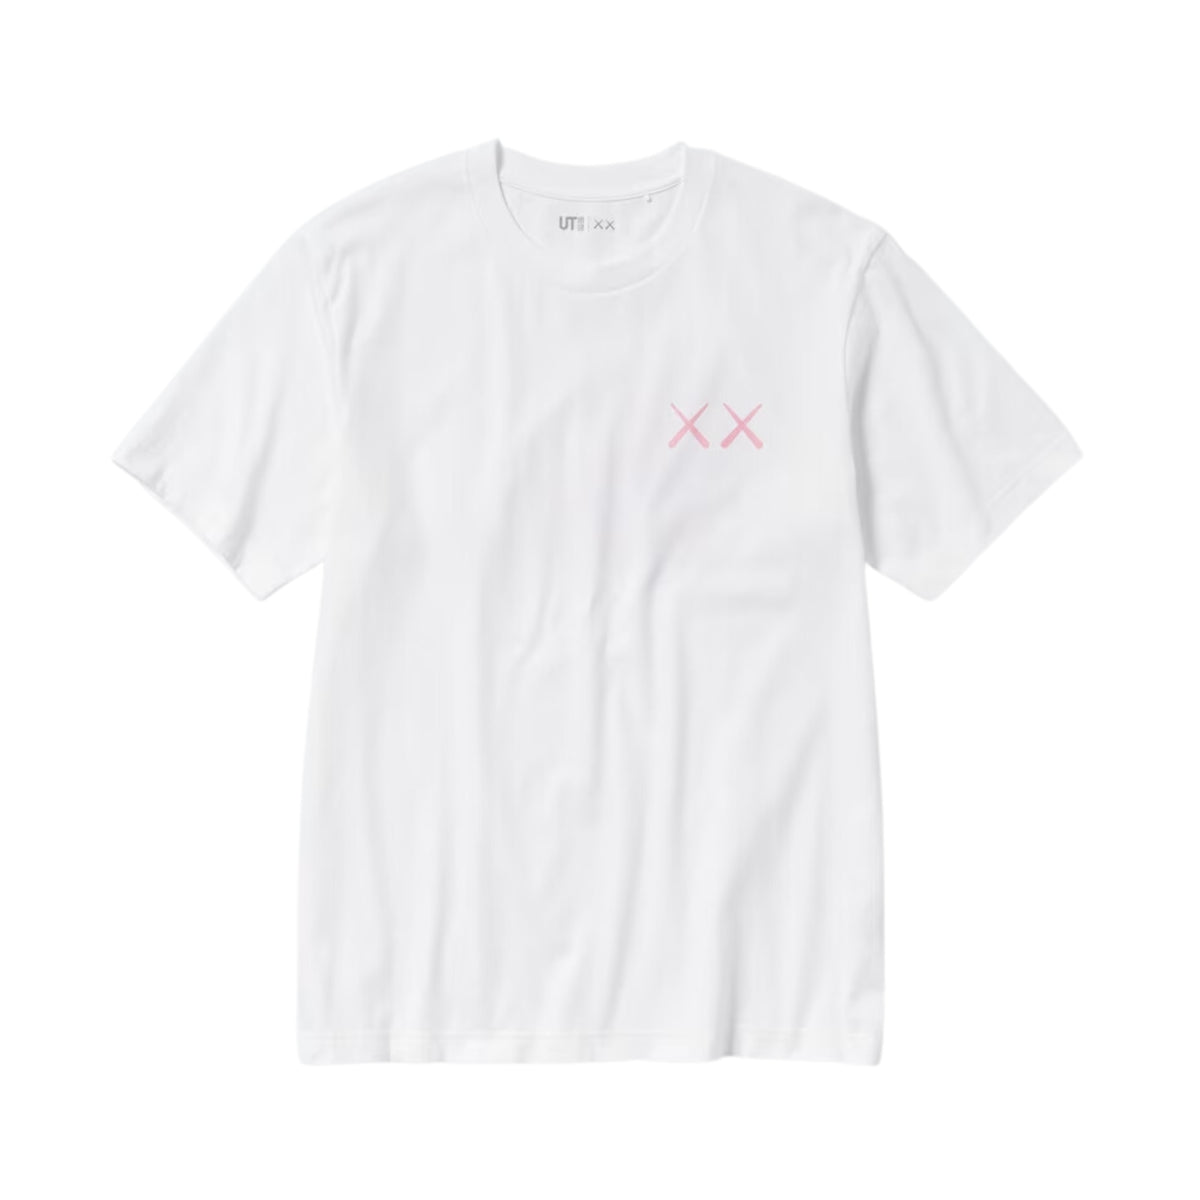 KAWS x Uniqlo UT Short Sleeve Graphic T-shirt "White" - T-Shirt - street-bill.dk